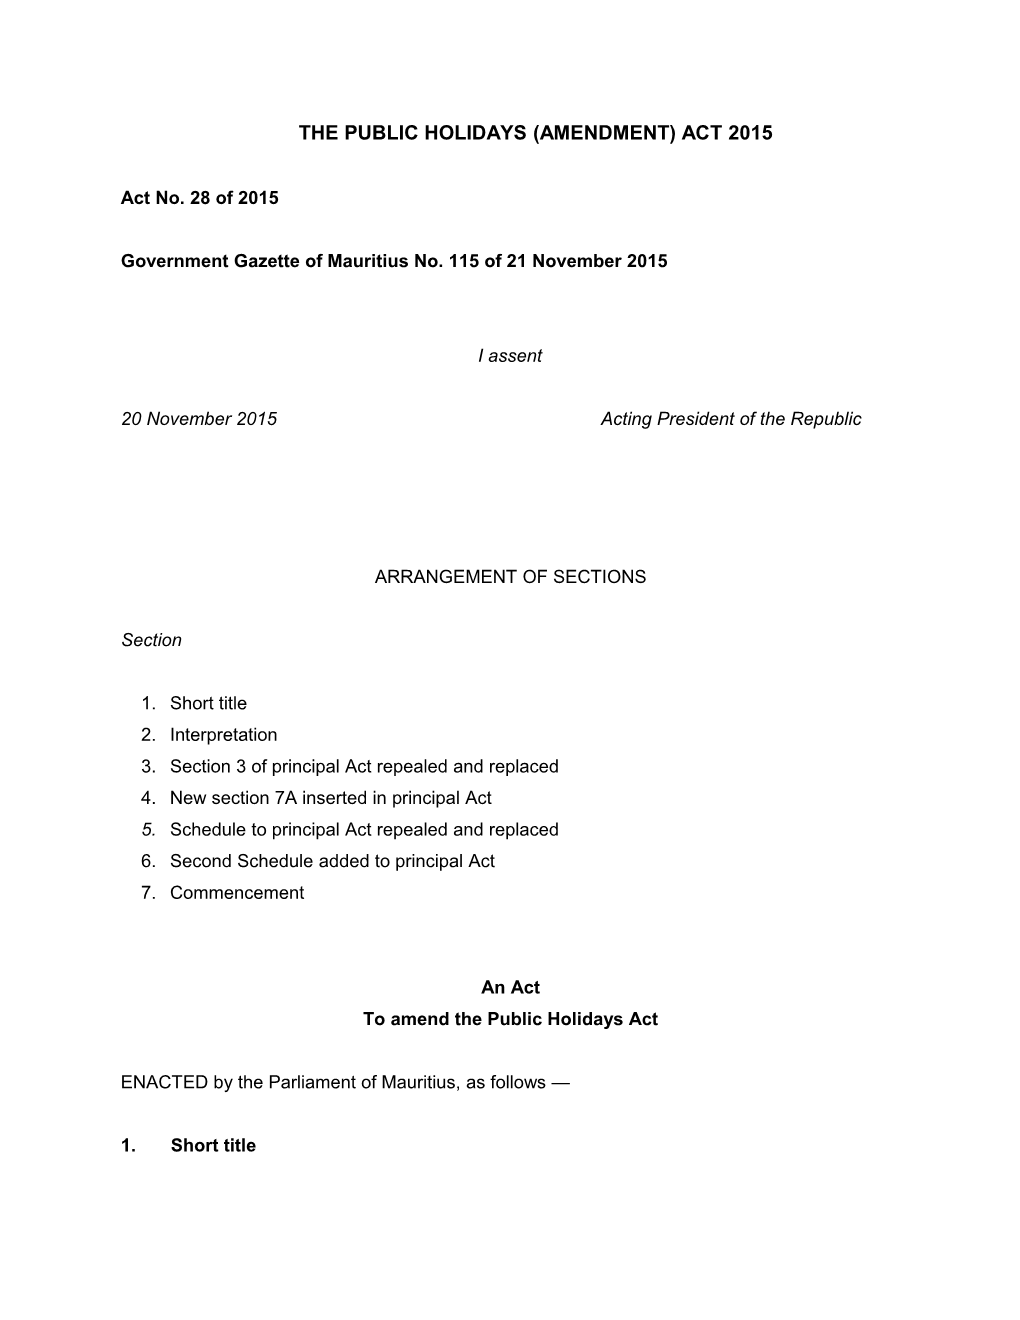 The Public Holidays (Amendment) Act 2015